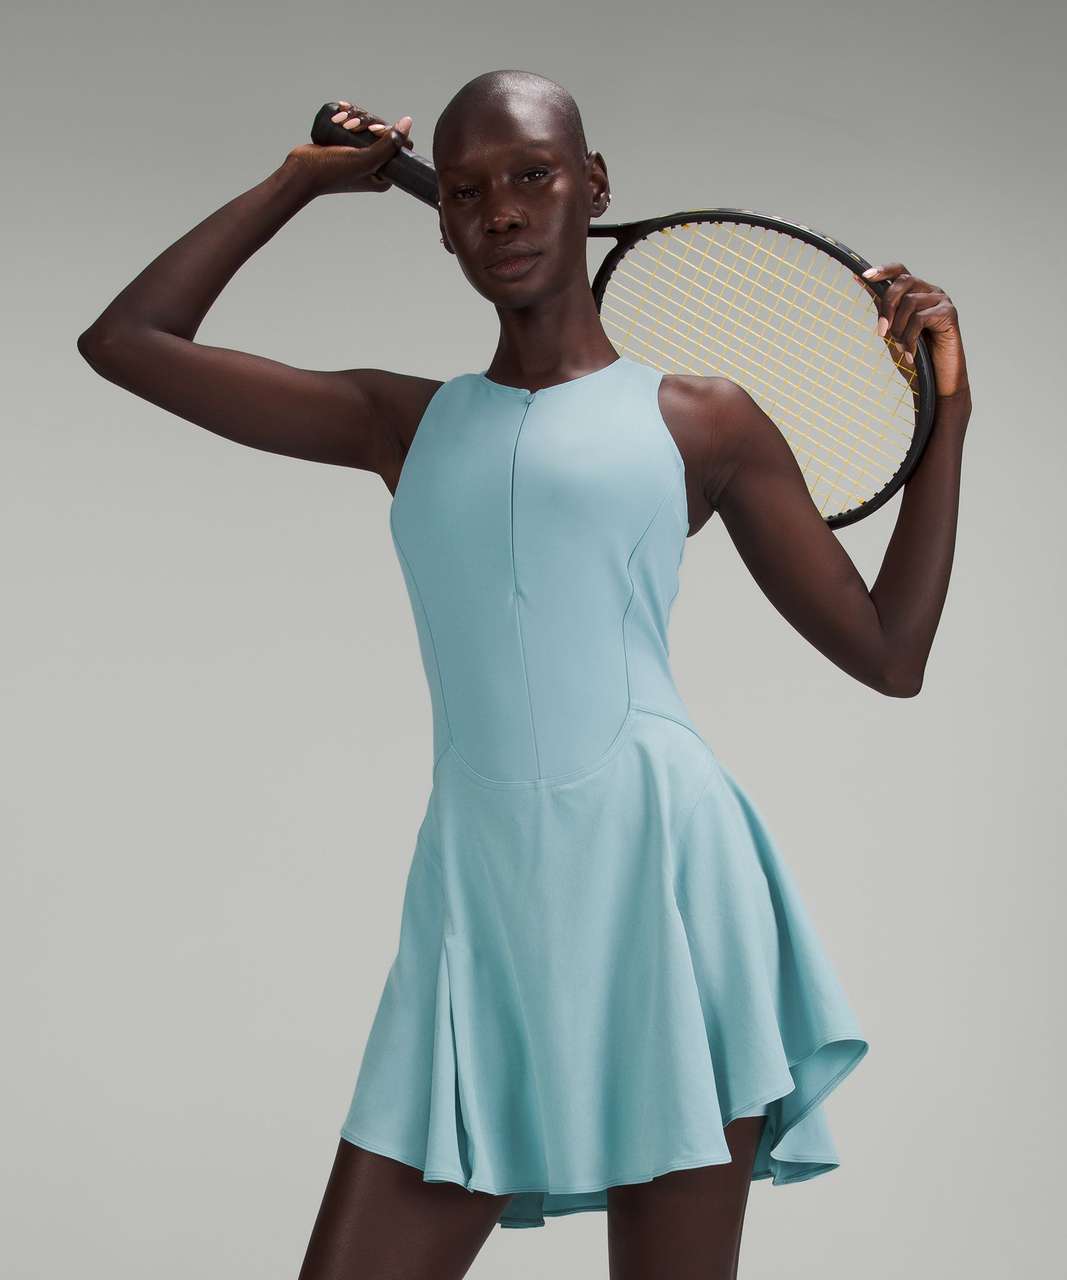 lululemon Nulux Long Sleeve Tennis Dress